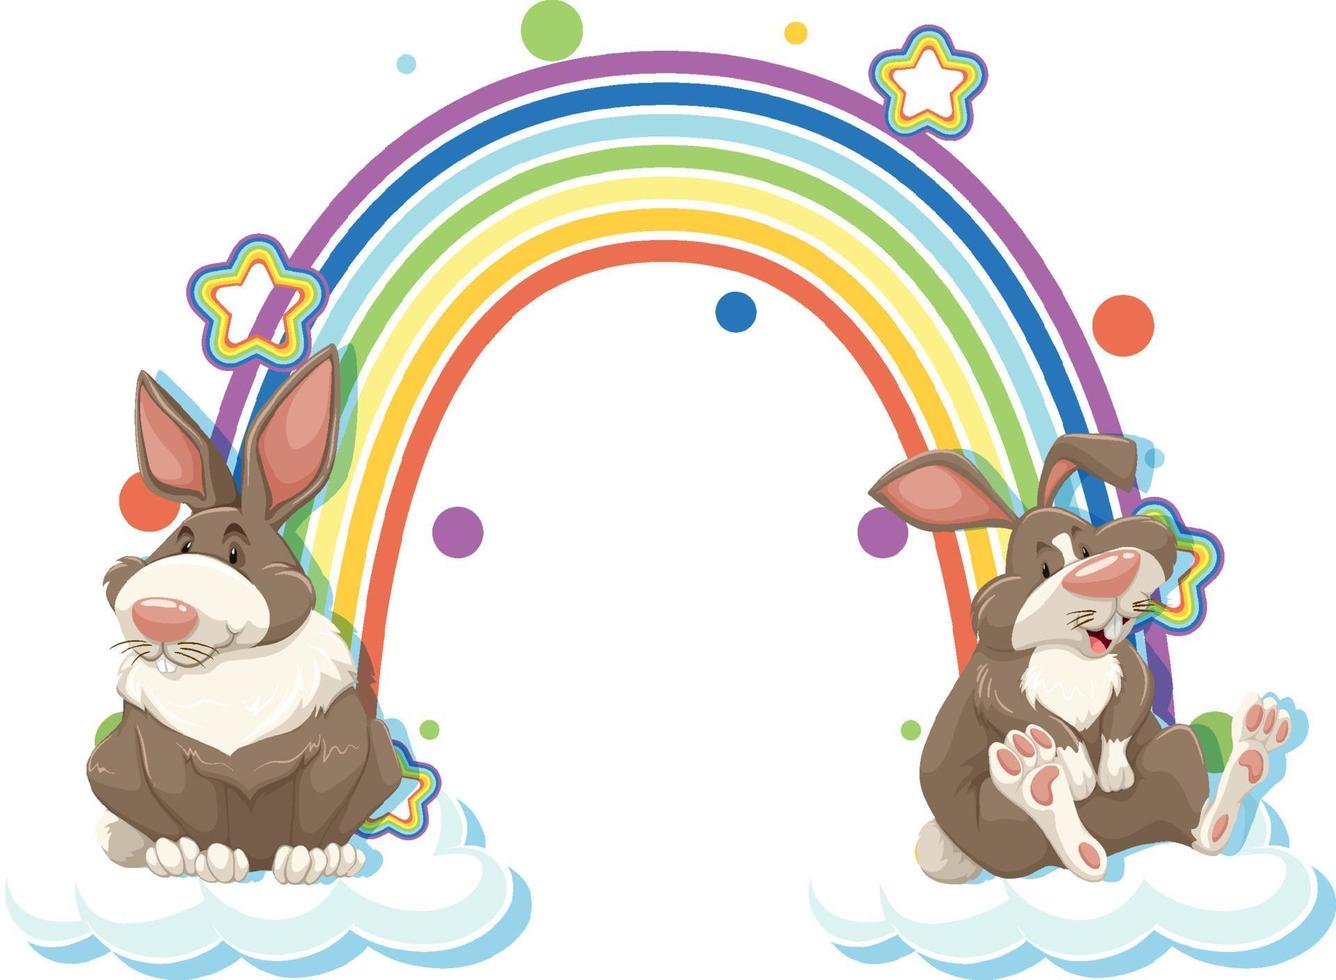 Two rabbits cartoon character with rainbow vector